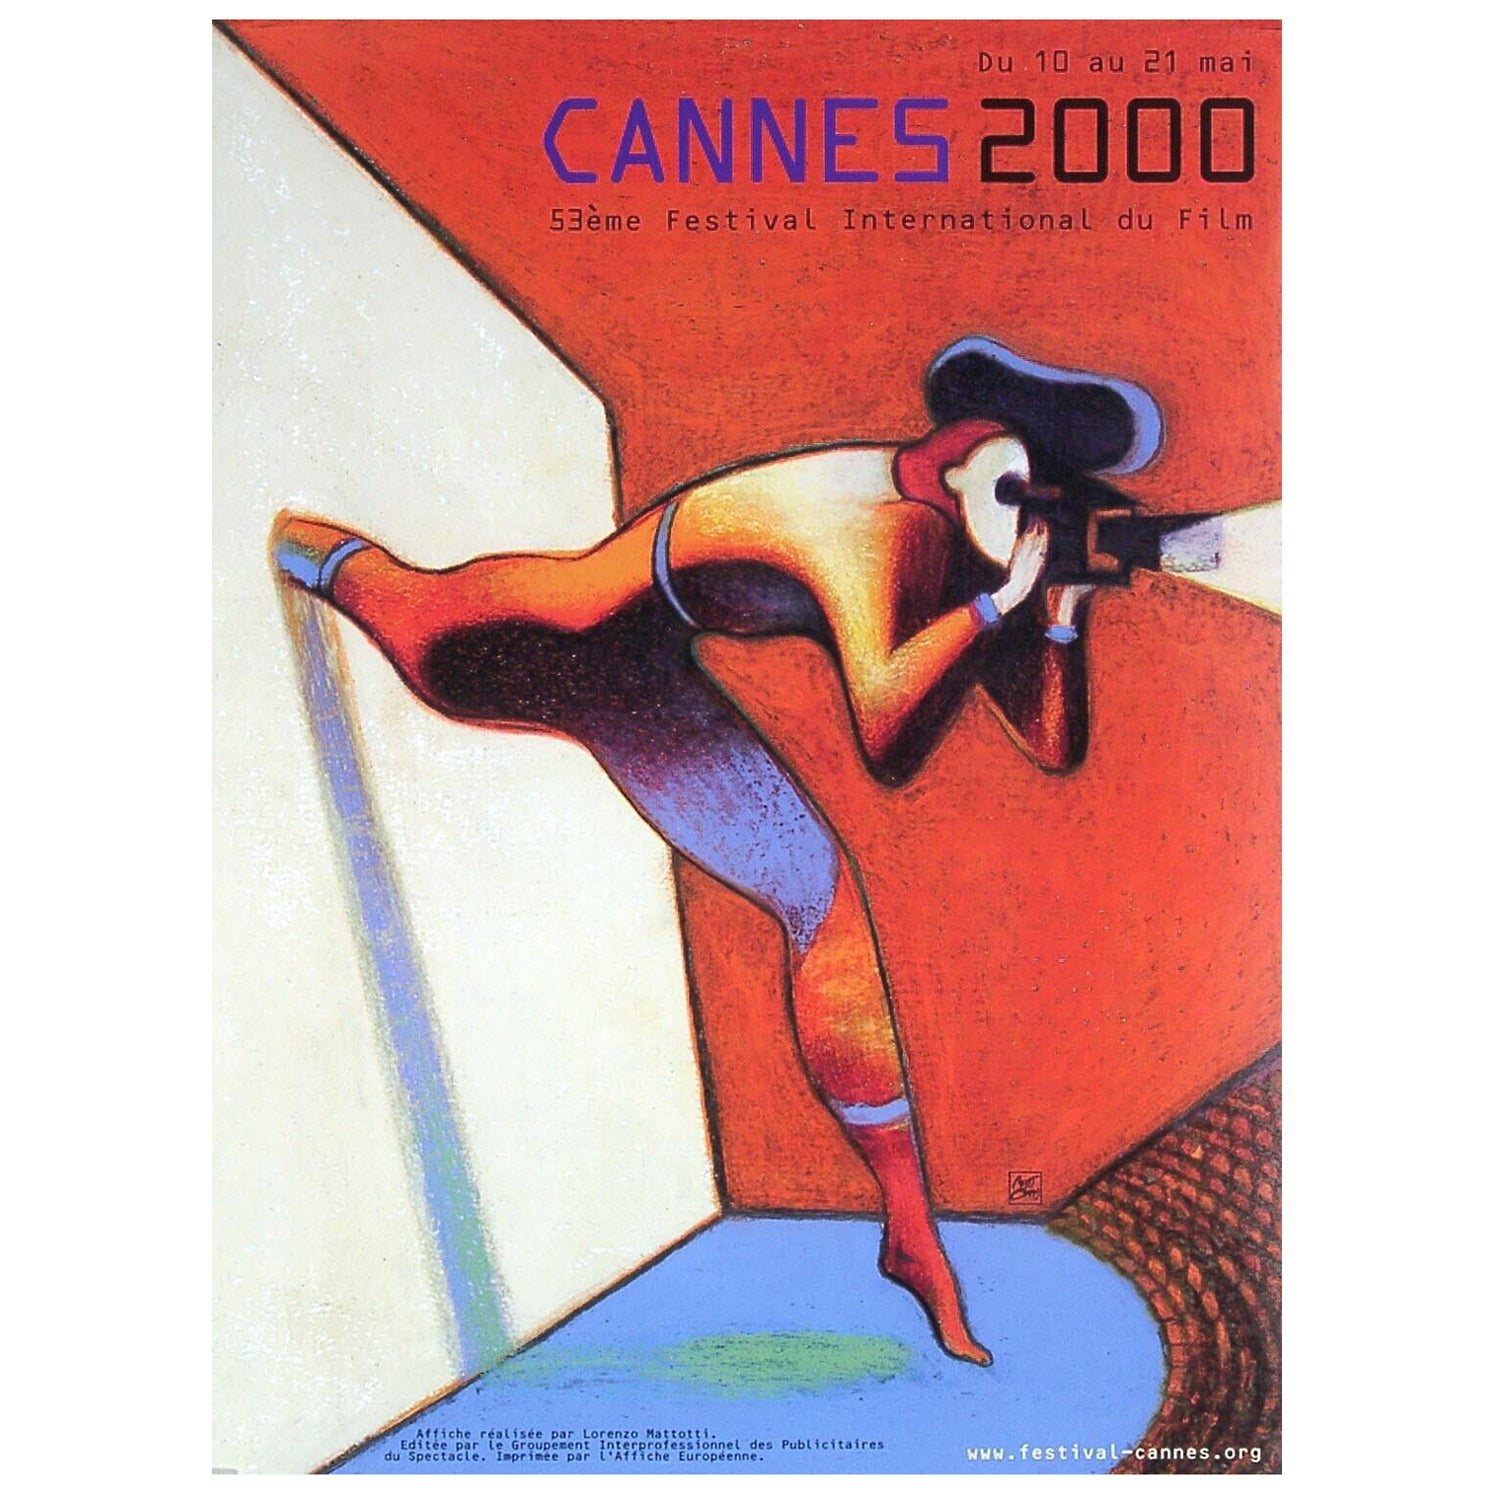 Plakat des 53. Annual Cannes Film Festival 2000 im Angebot